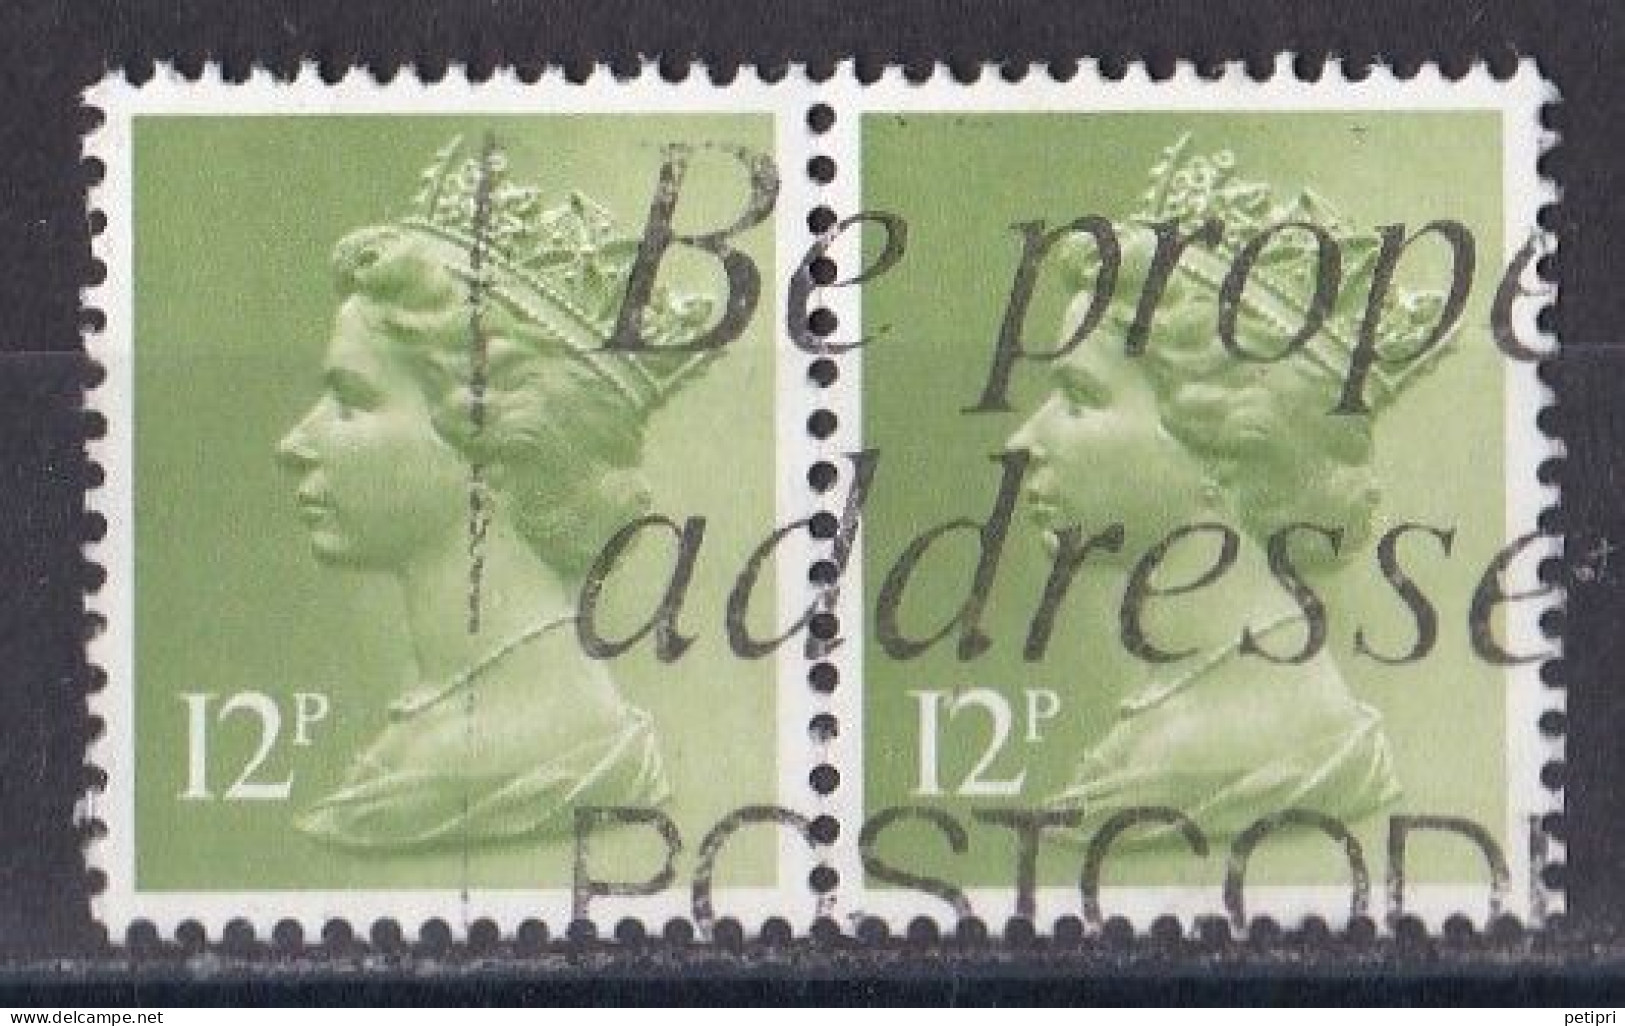 Grande Bretagne - 1971 - 1980 -  Elisabeth II -  Y&T N °  902  Paire  Oblitérée - Usados